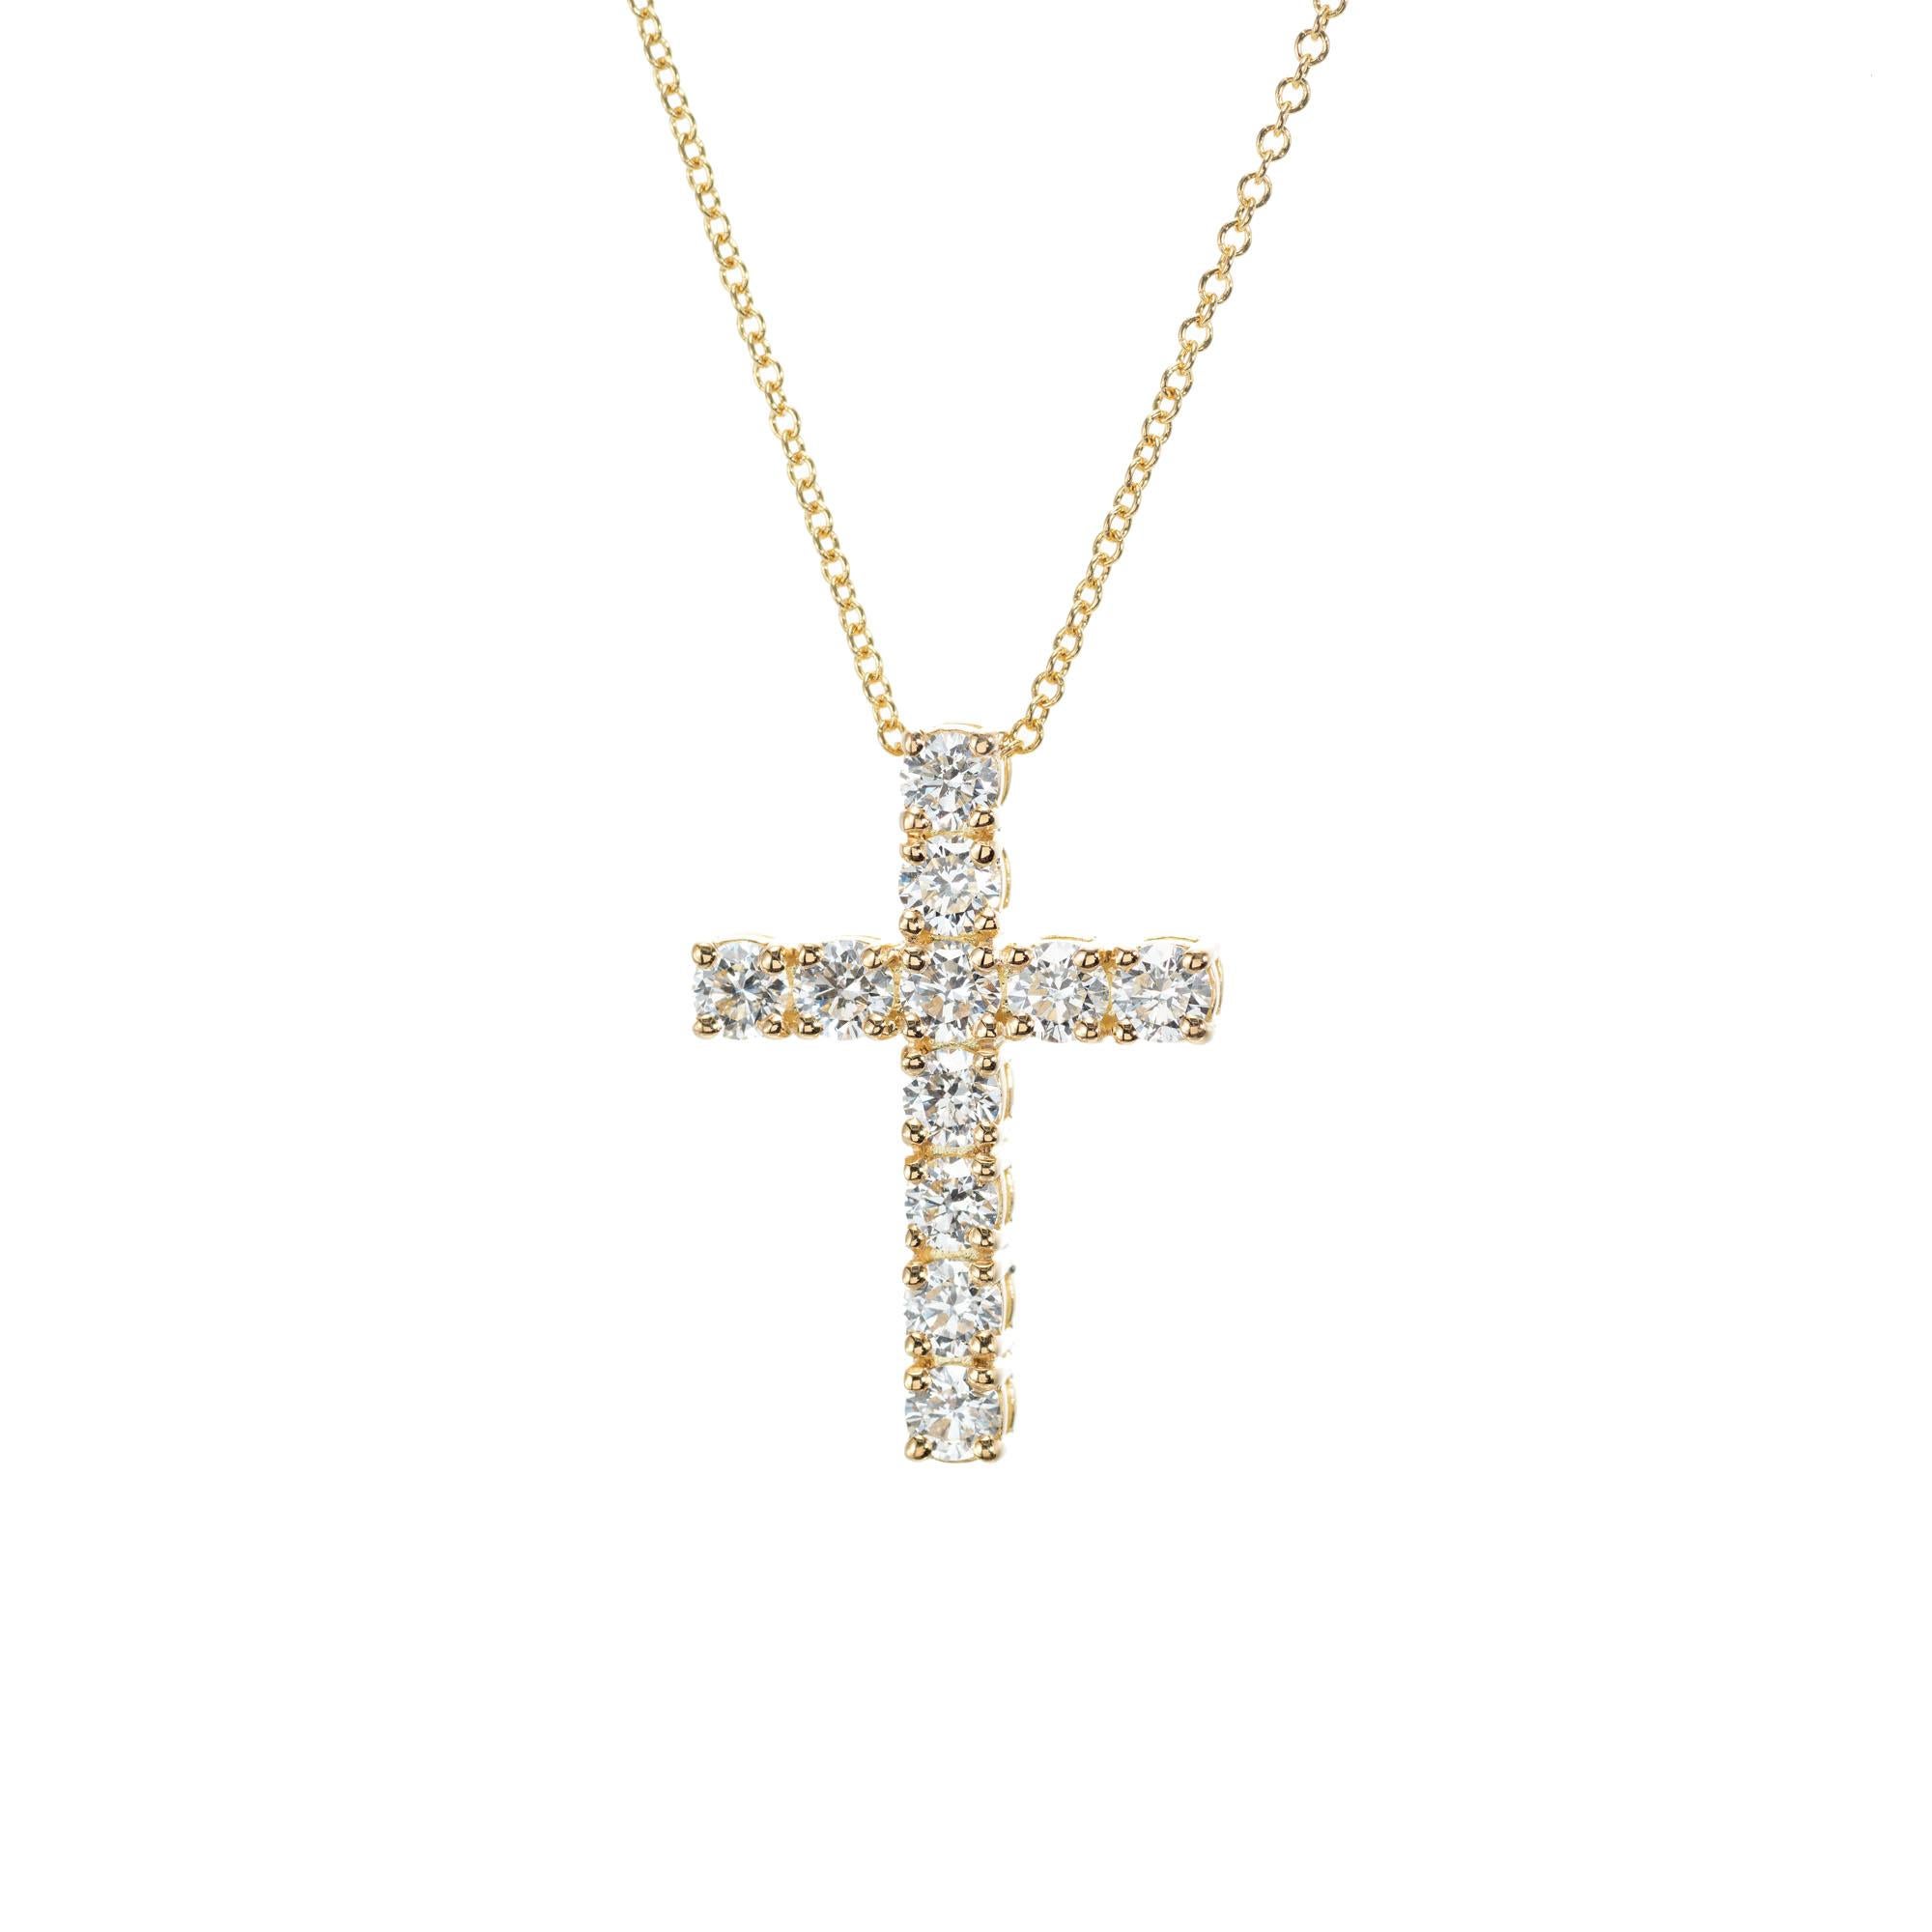 Round Cut Peter Suchy 1.15 Carat Diamond Yellow Gold Cross Pendant Necklace